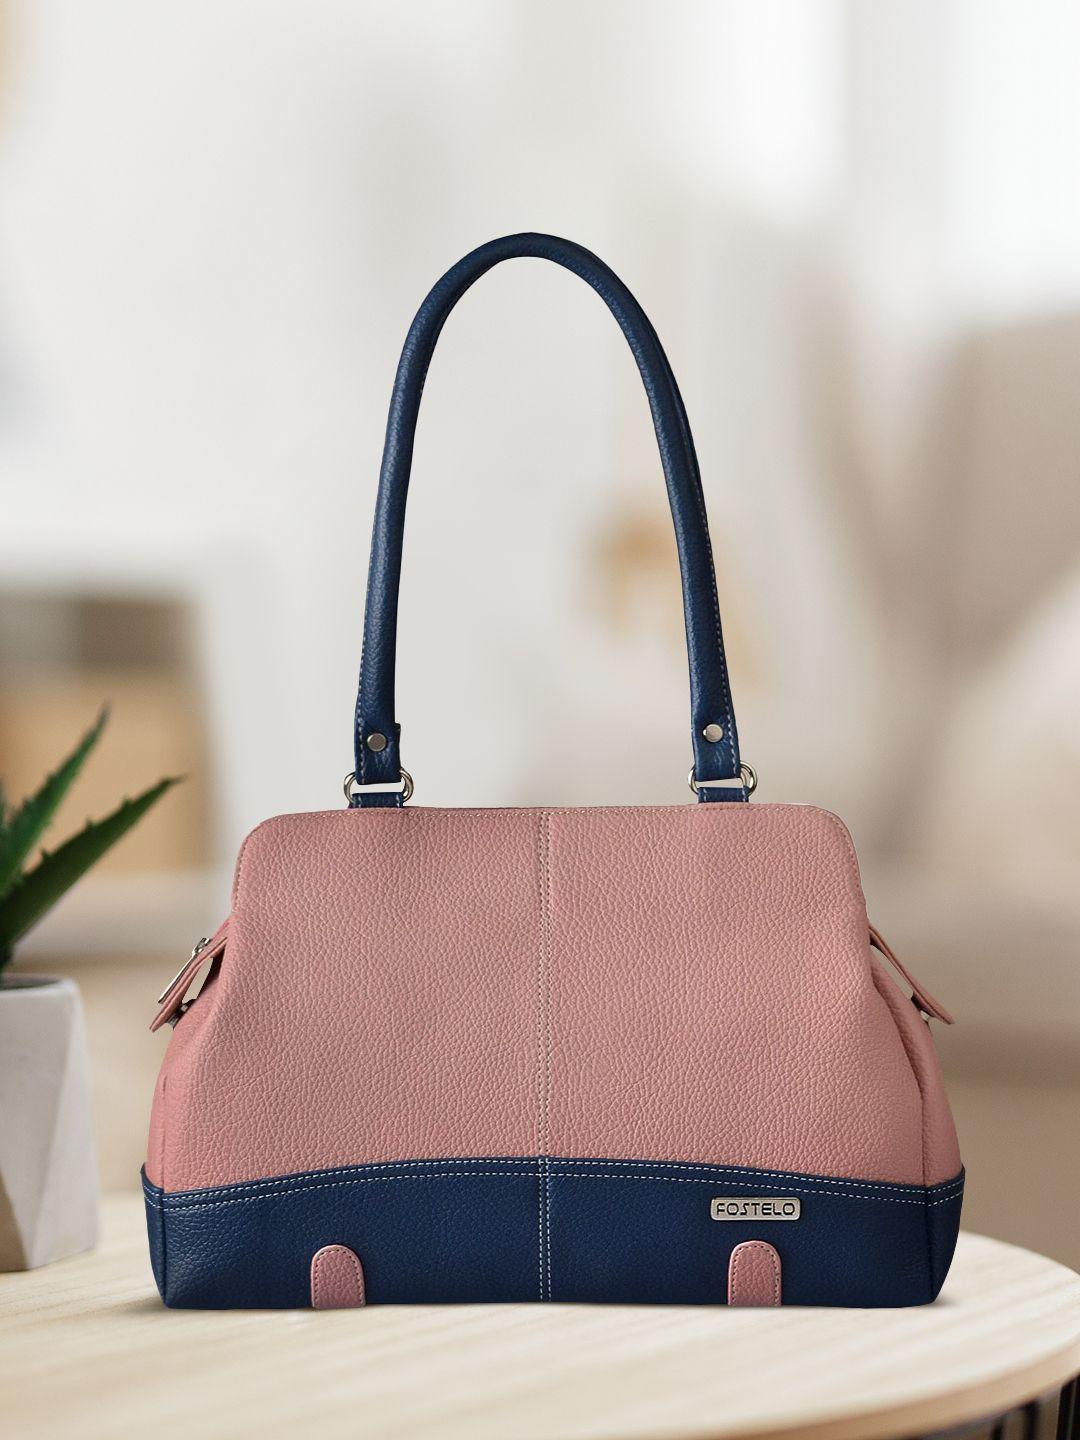 fostelo pink & blue colourblocked shoulder bag